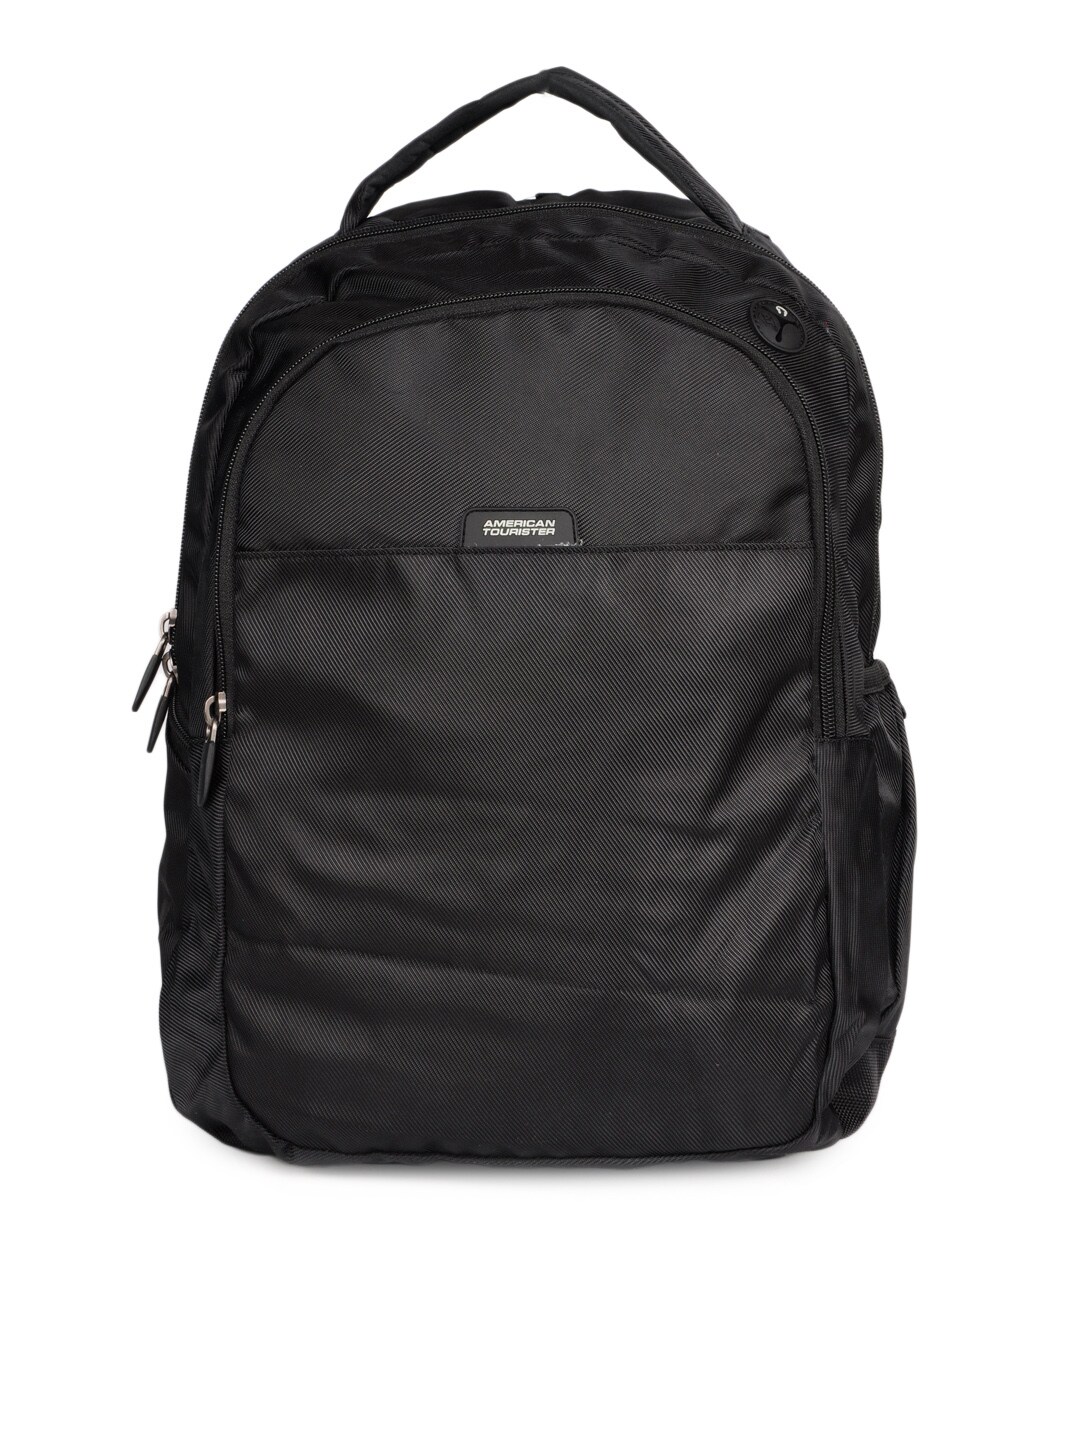 American Tourister Unisex Black Backpack